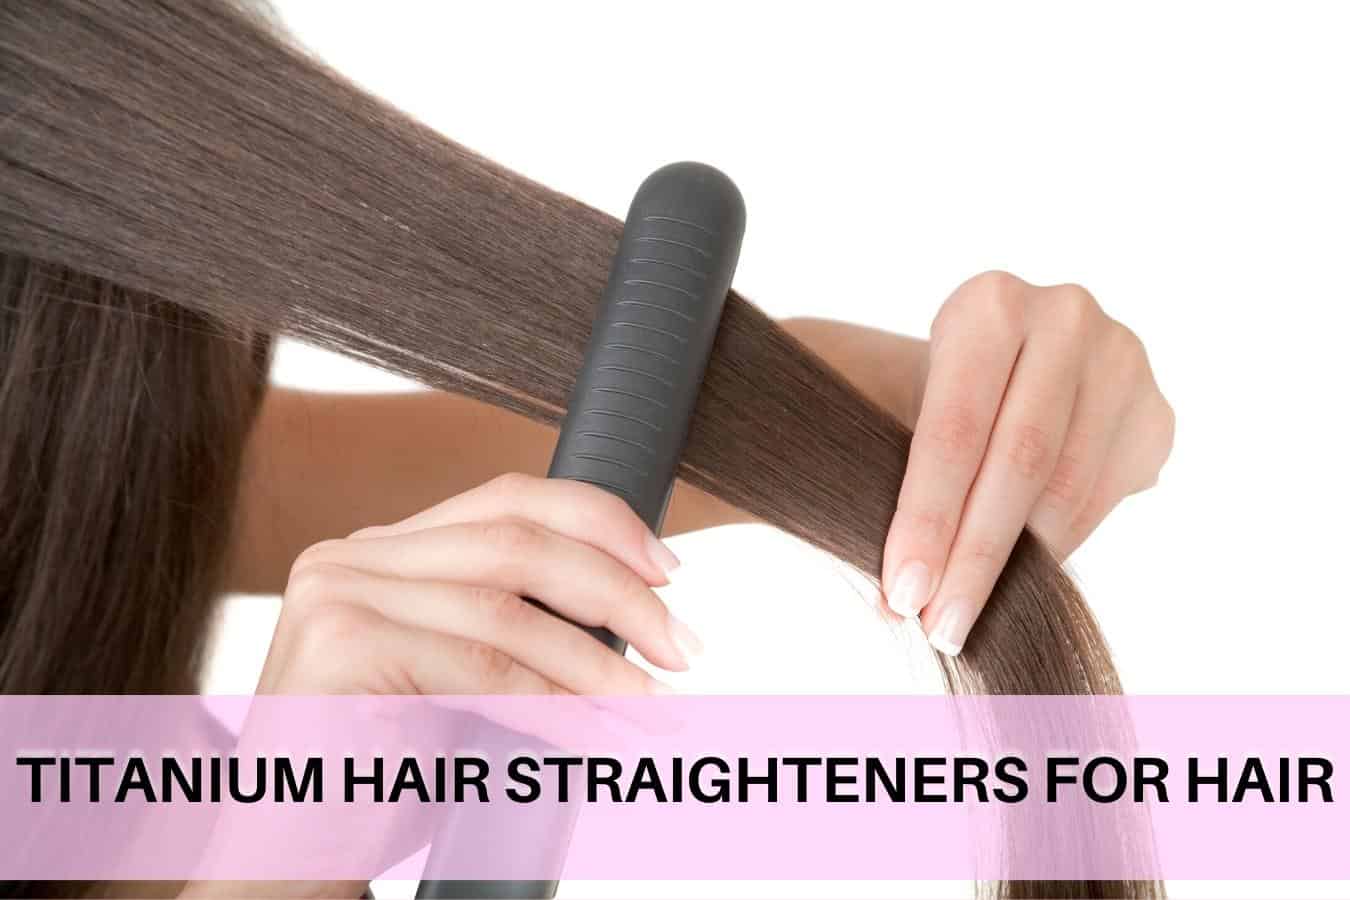 Are Titanium Hair Straighteners Good for Hair?